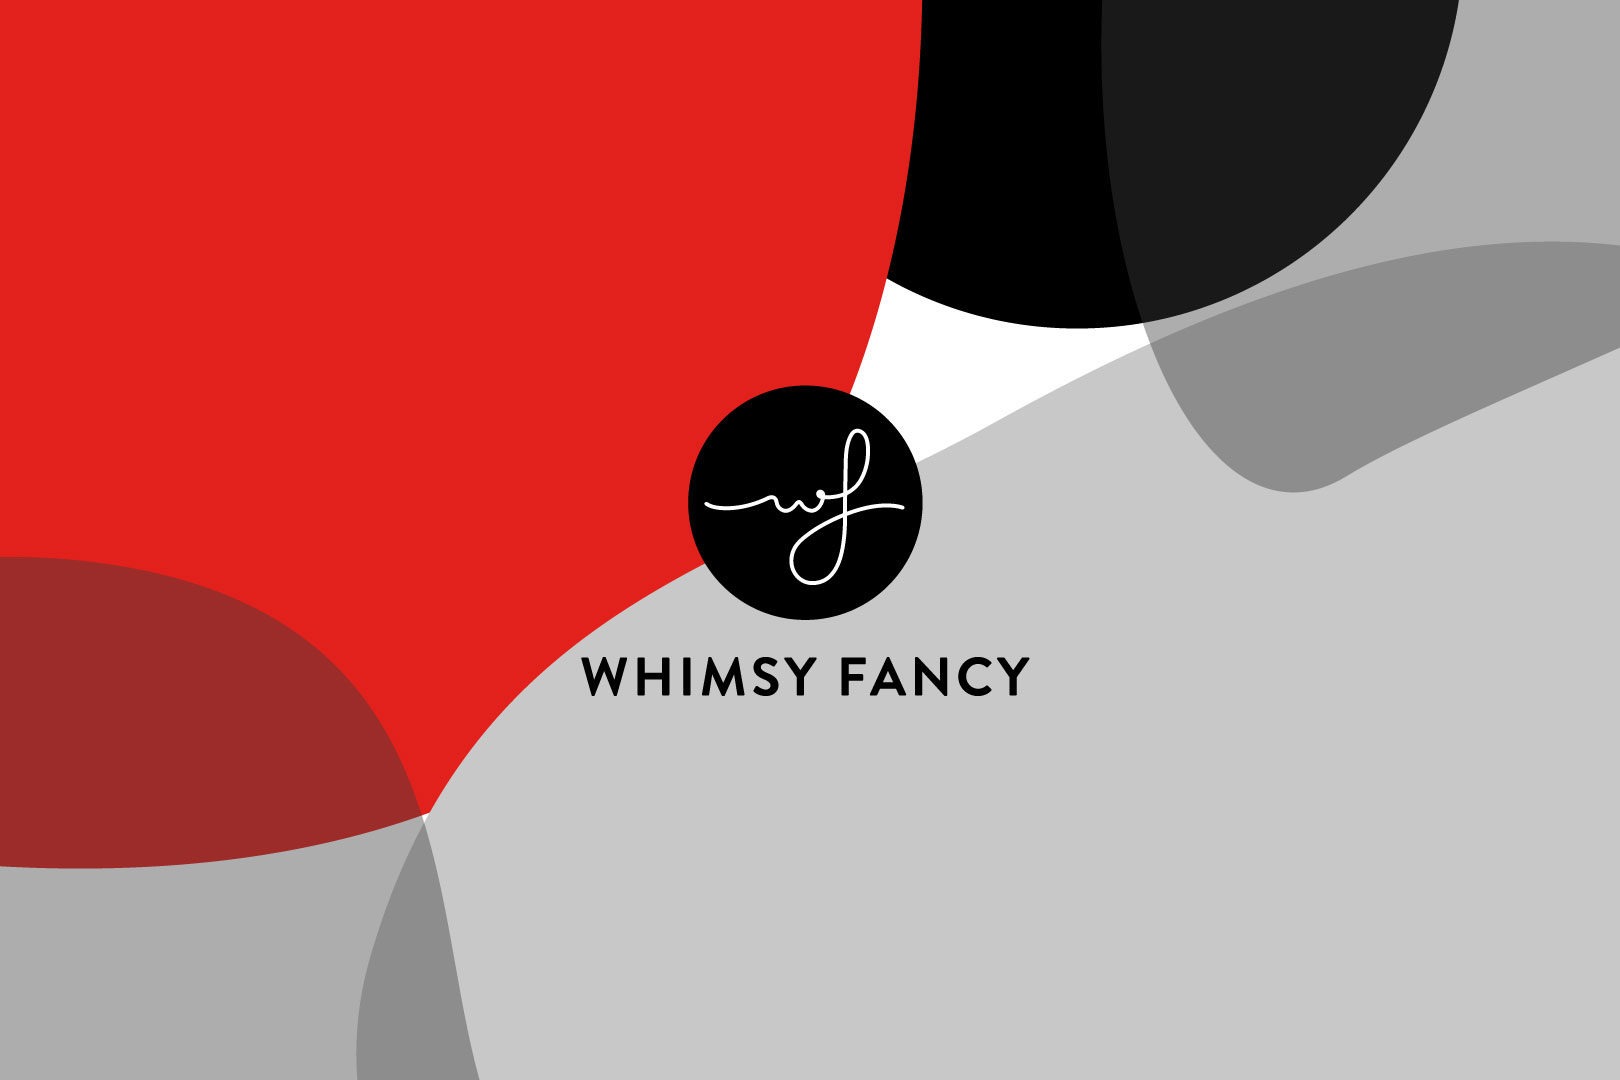 Whimsy Fancy branding and logo design by Indigo branding